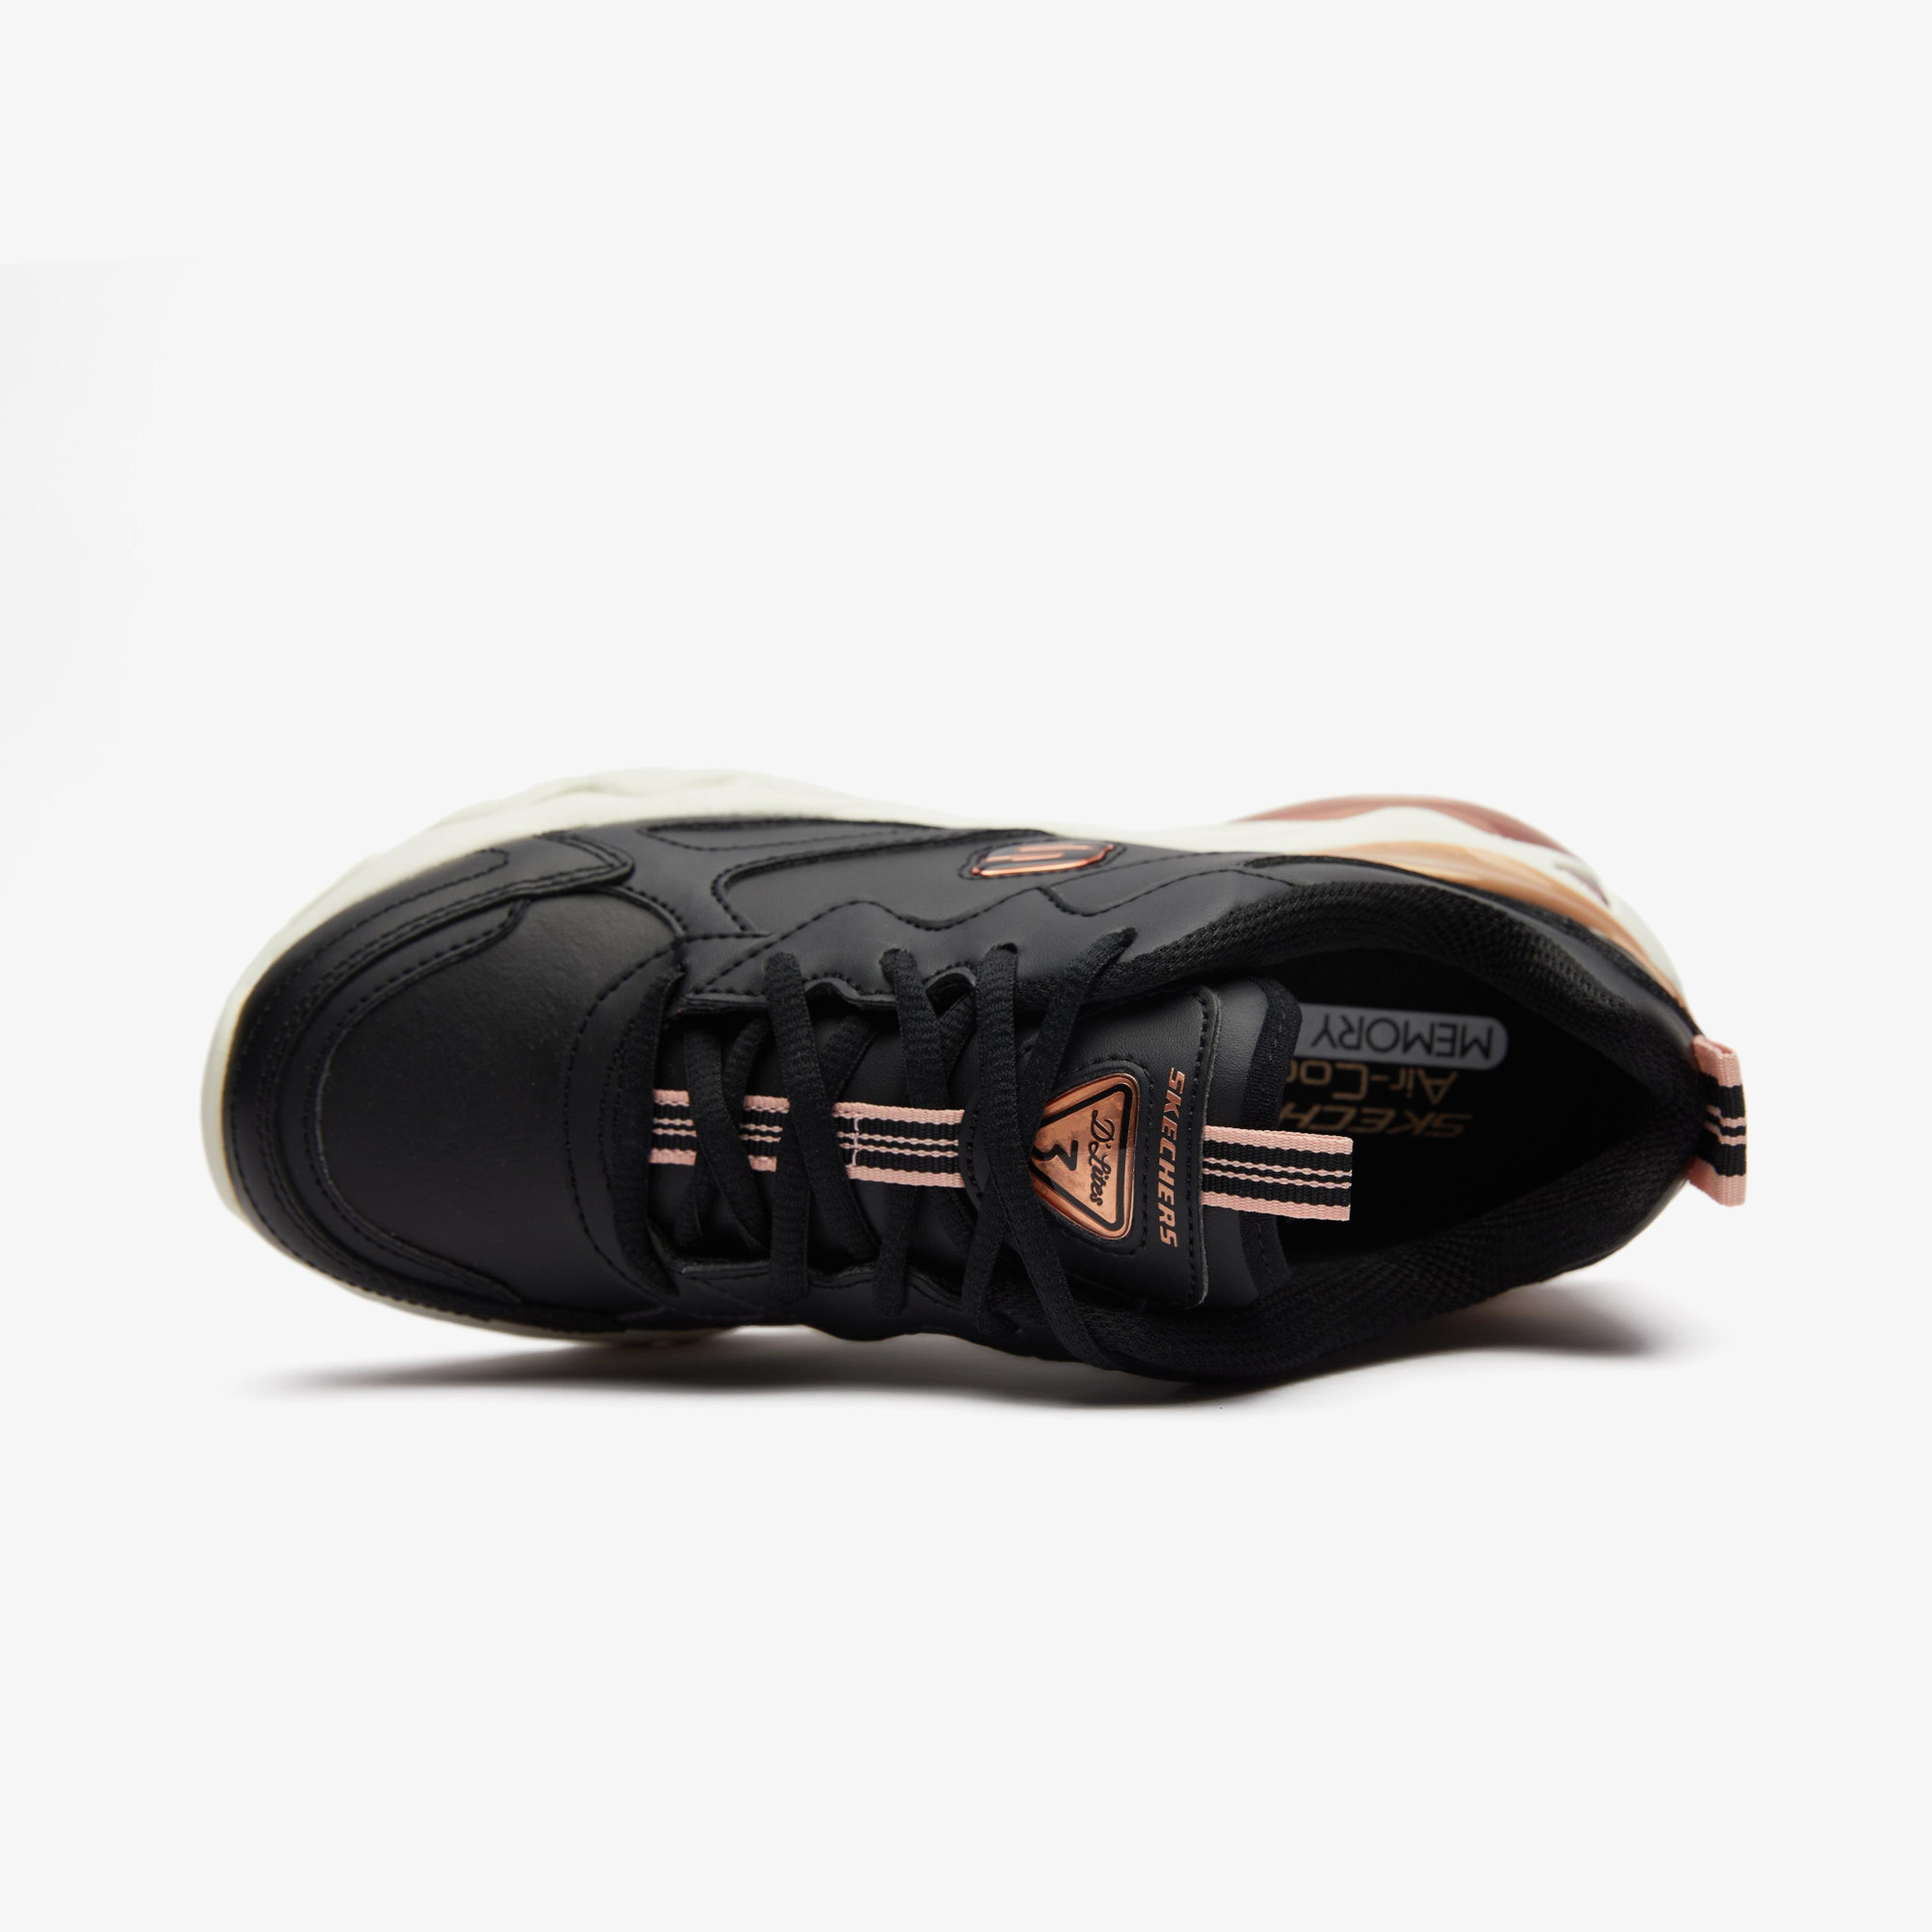 Skechers D'lites 3.0 Air-Golden Rules Kadın Siyah Spor Ayakkabı